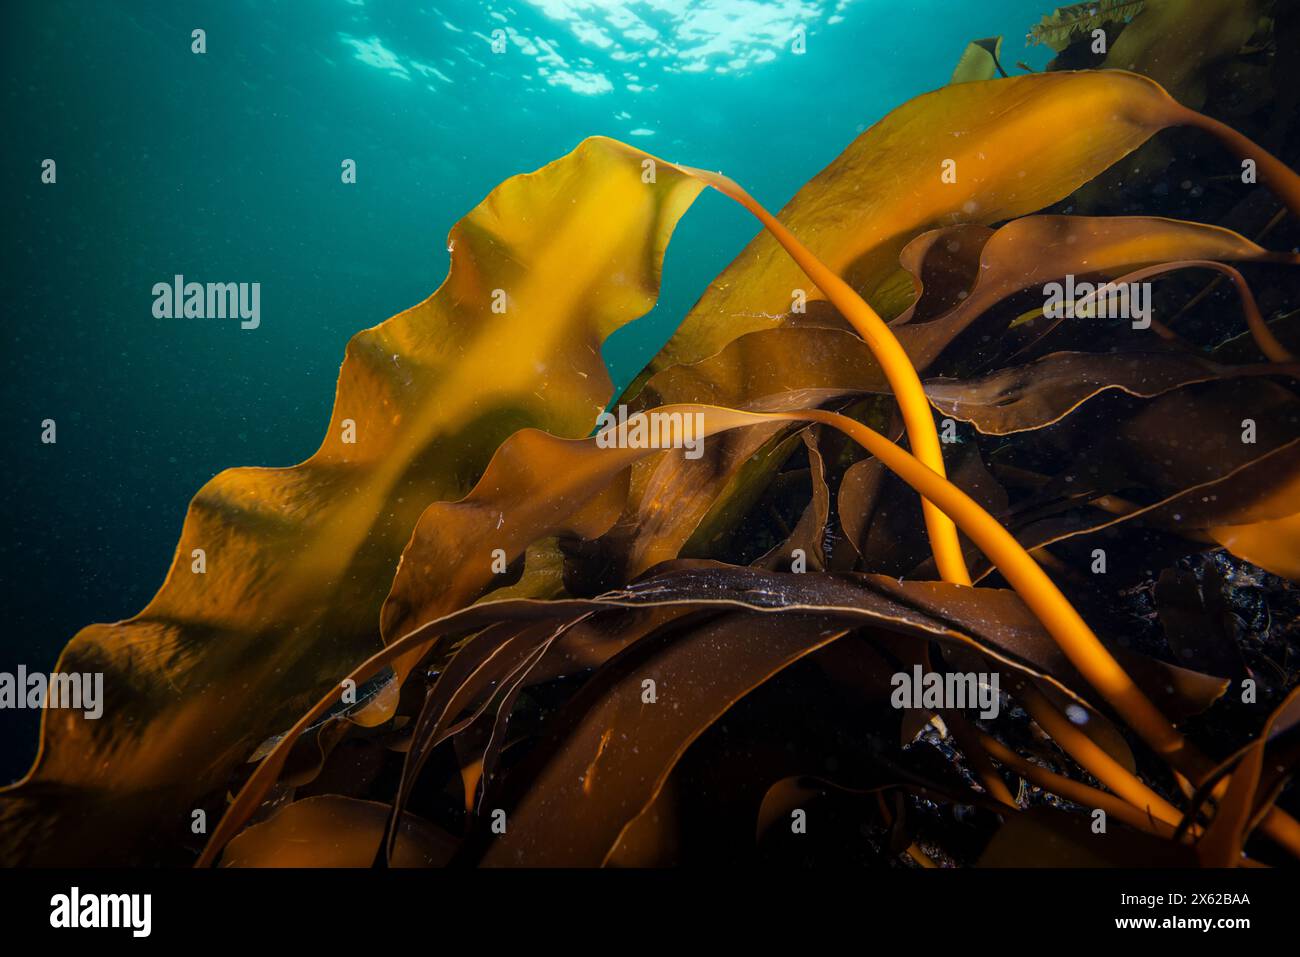 Hollow-Stemmed kelp sott'acqua nel fiume San Lorenzo in Canada Foto Stock